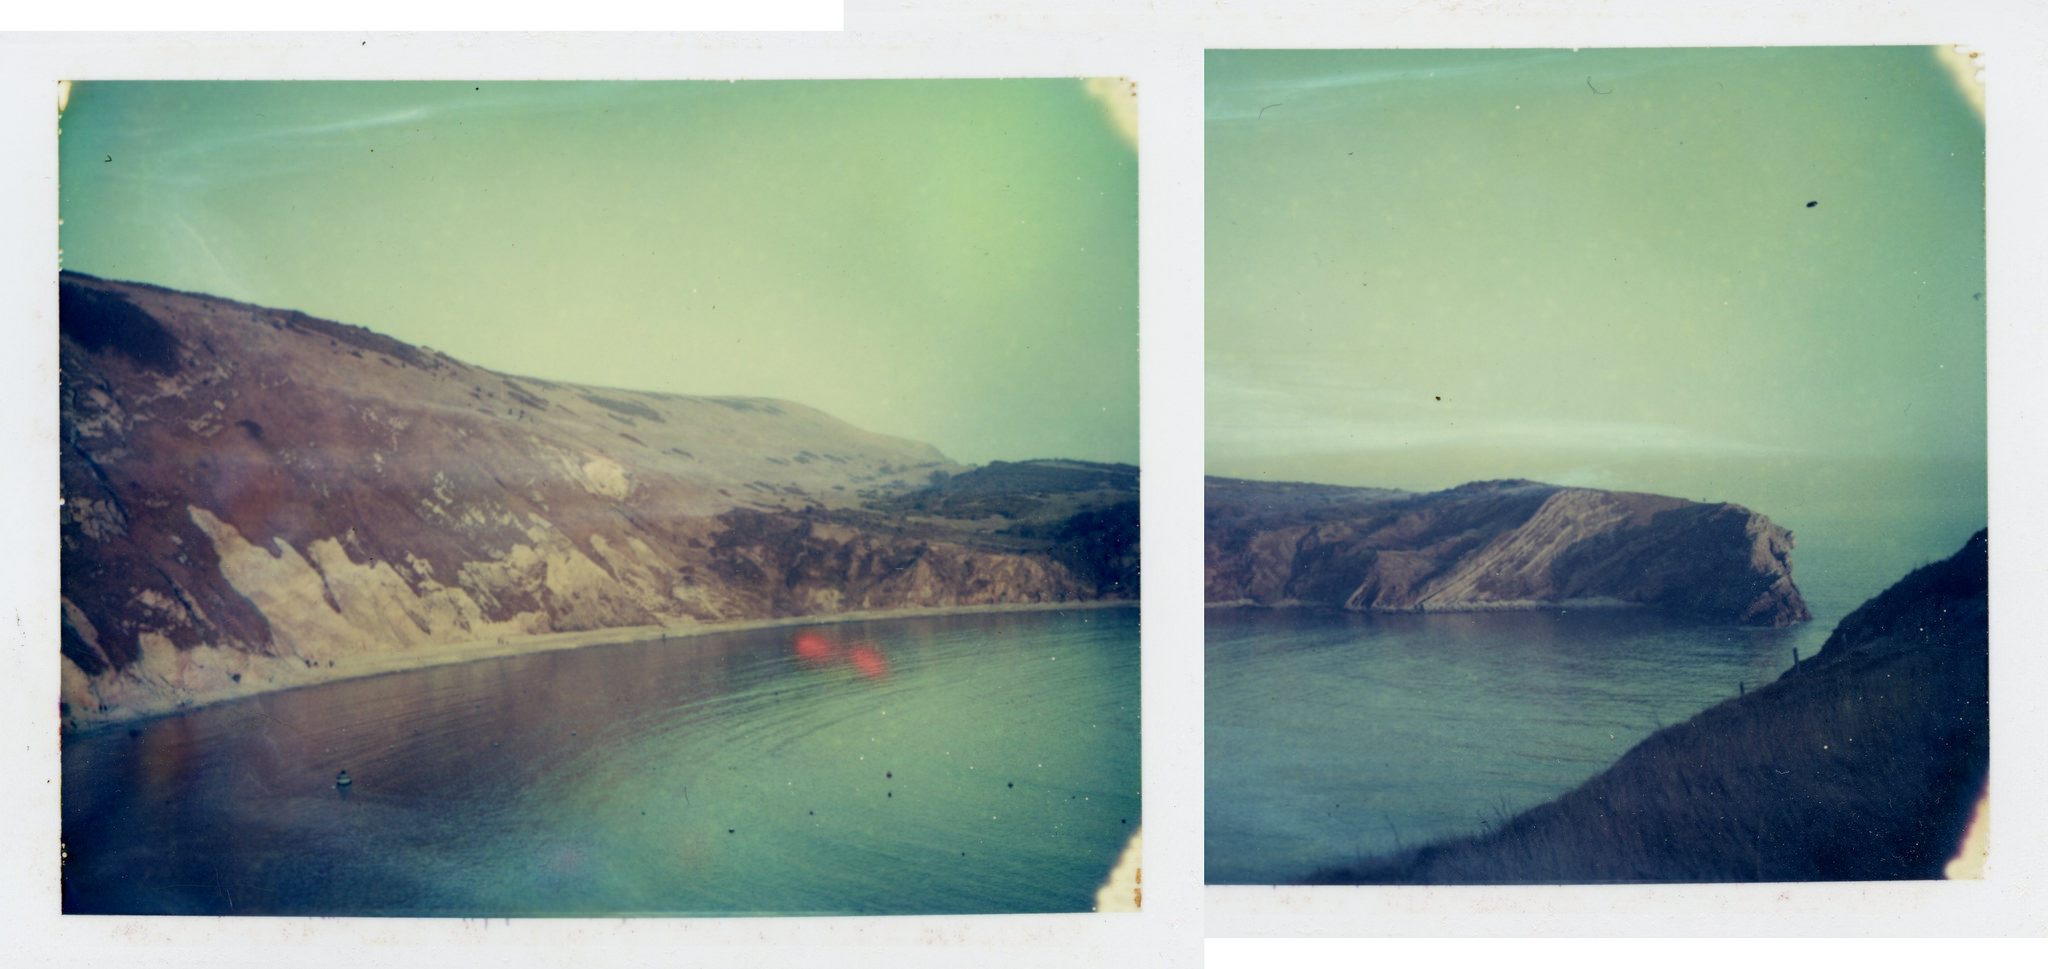 Lulworth Cove | Speed Graphic | Polaroid Type 108 FIlm | Matt Smith